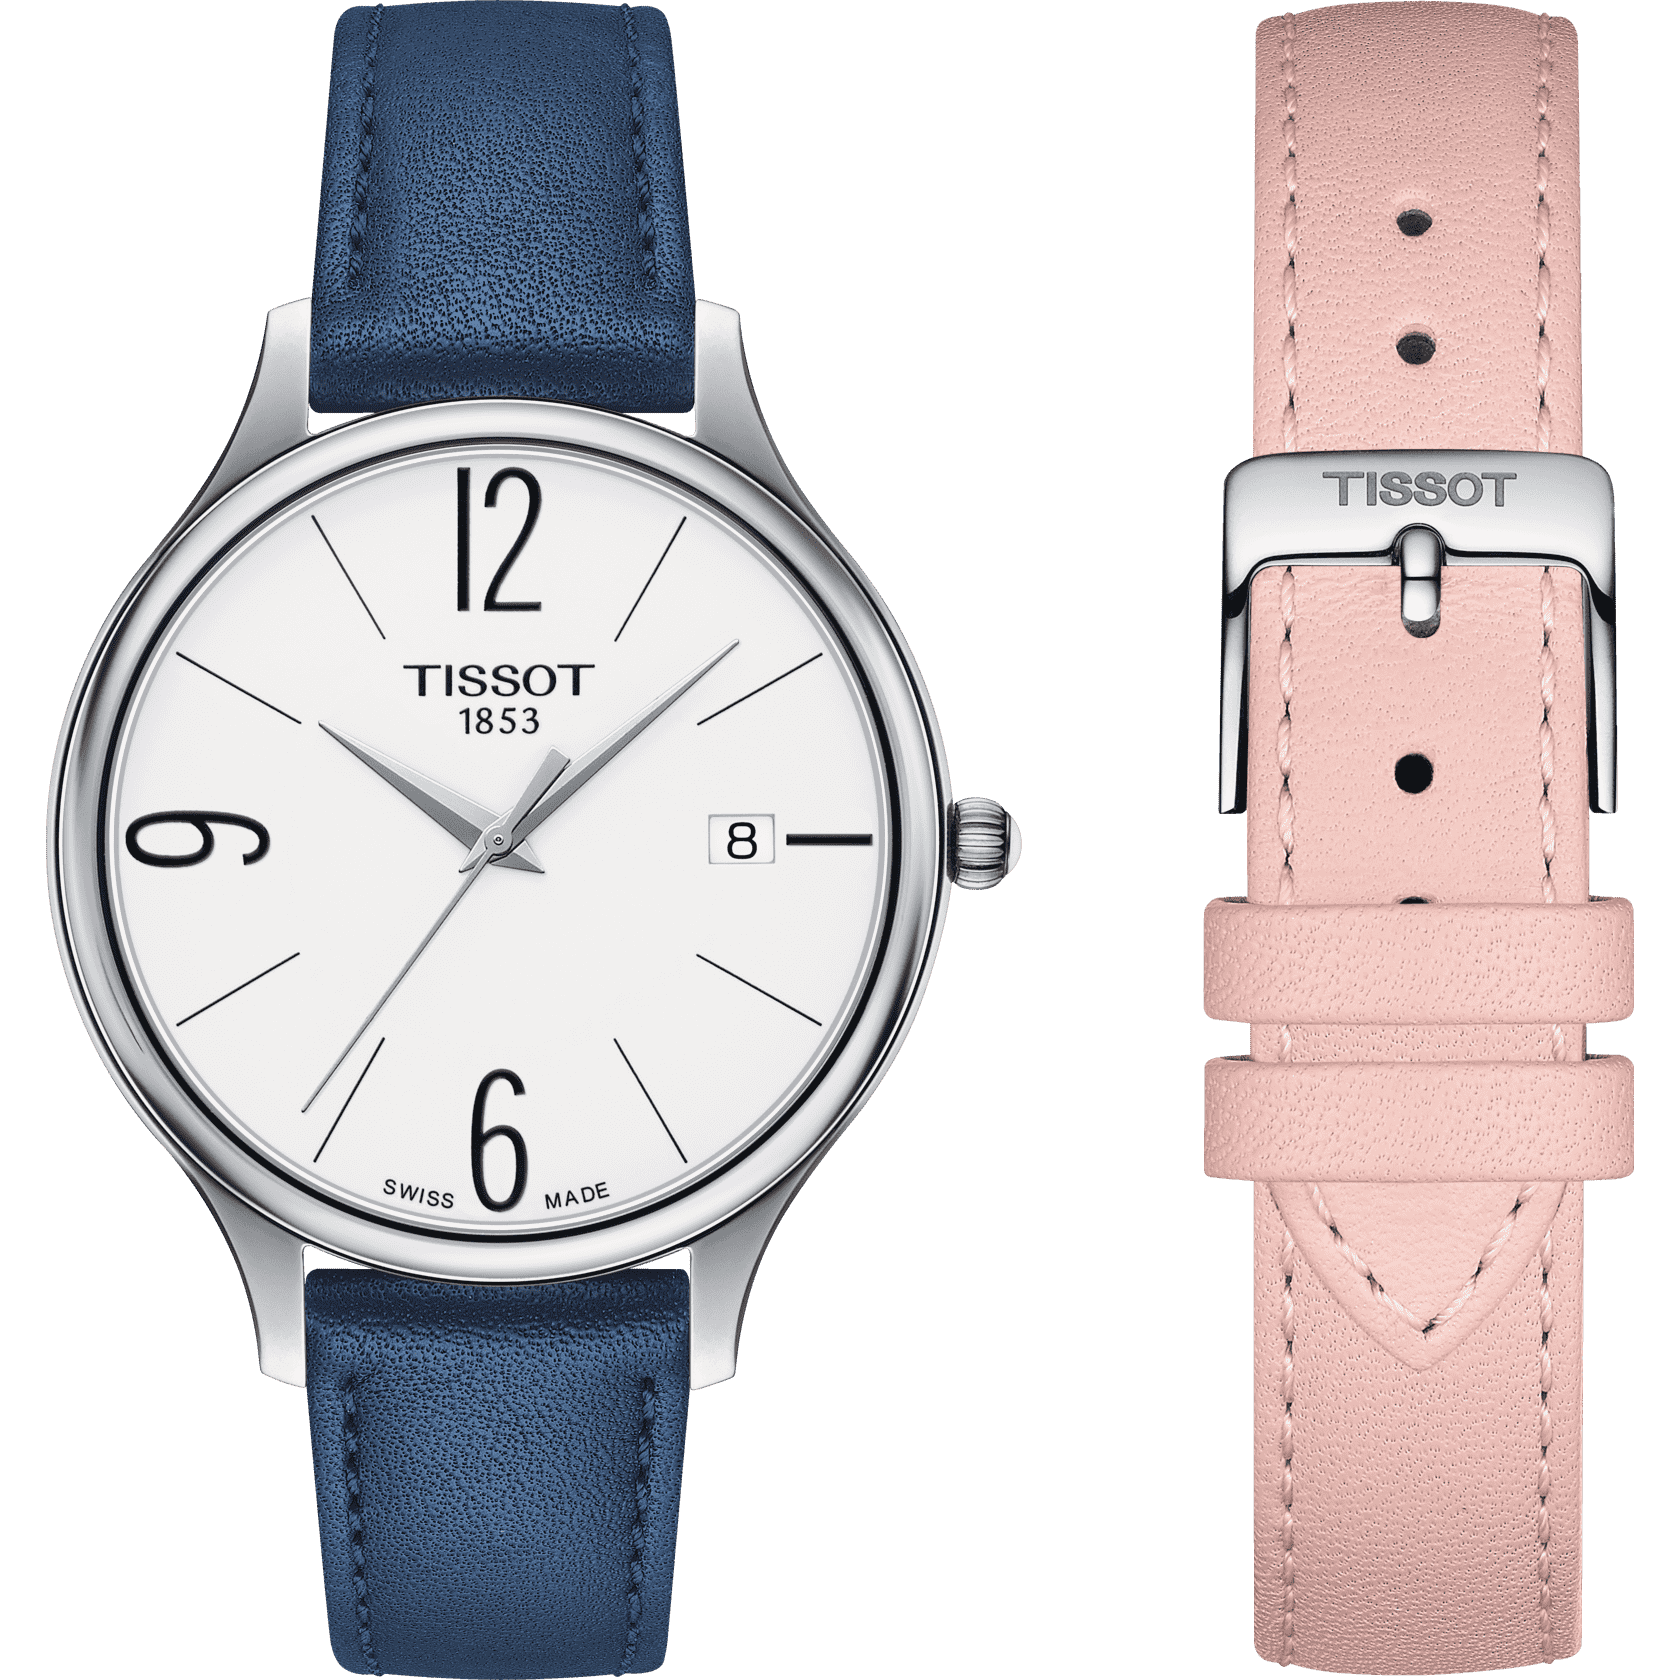 Copy Baume Mercier Watches